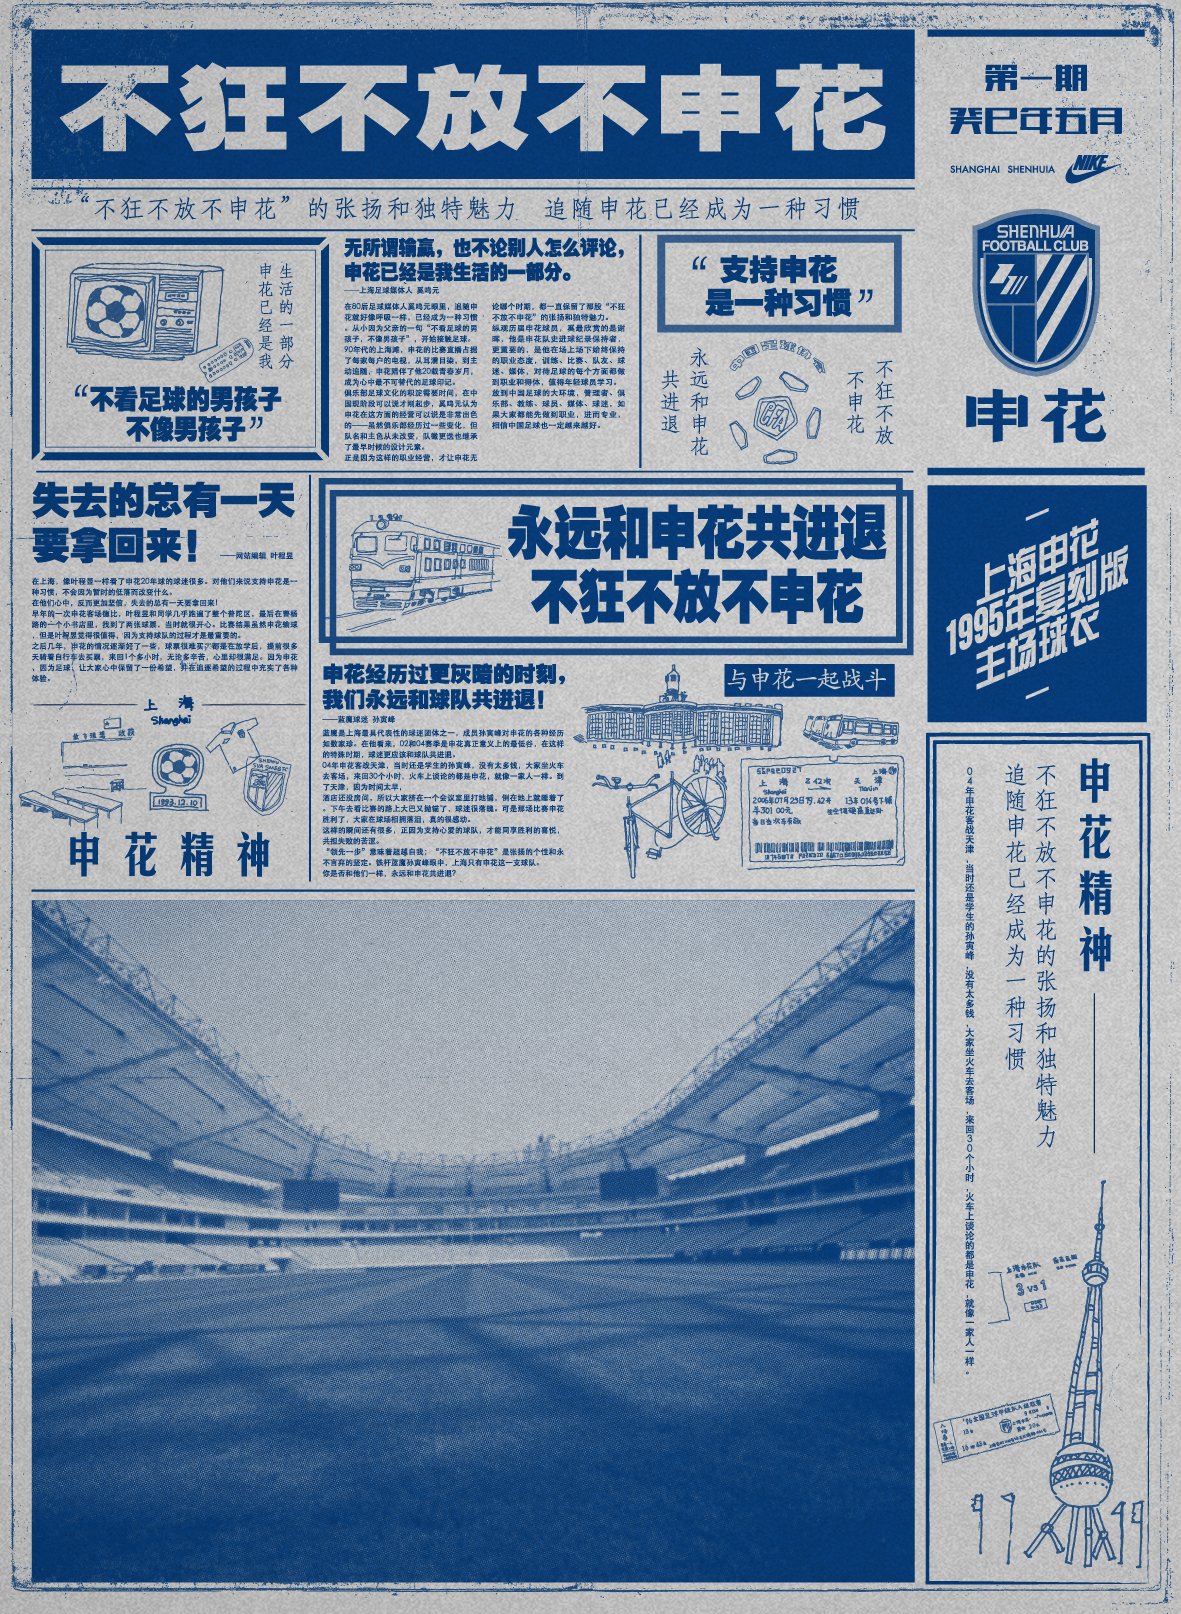 shanghai football creative assets